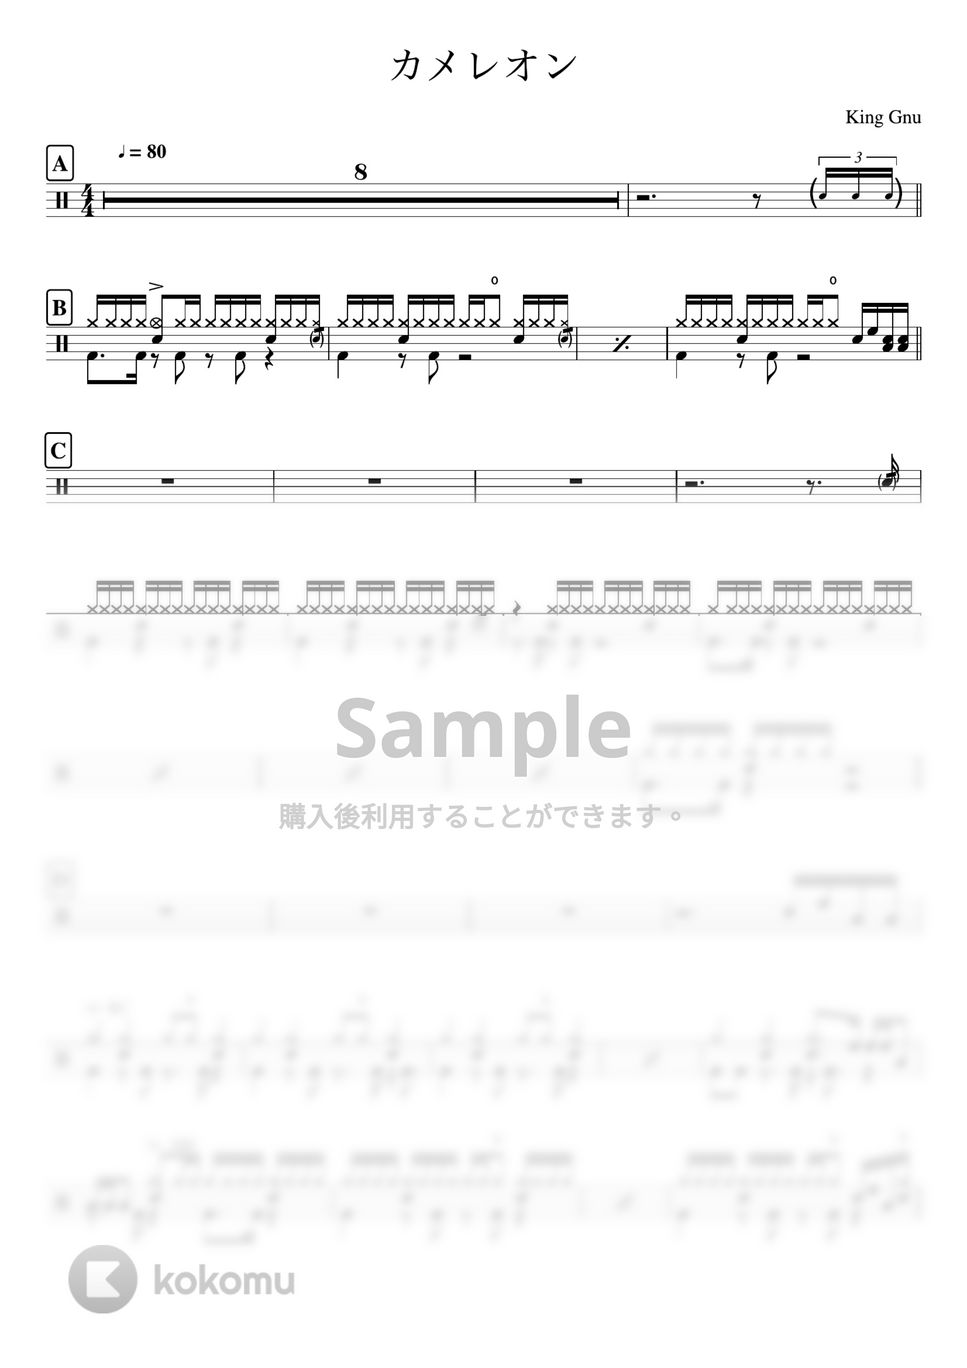 King Gnu - カメレオン by Daichi Drums